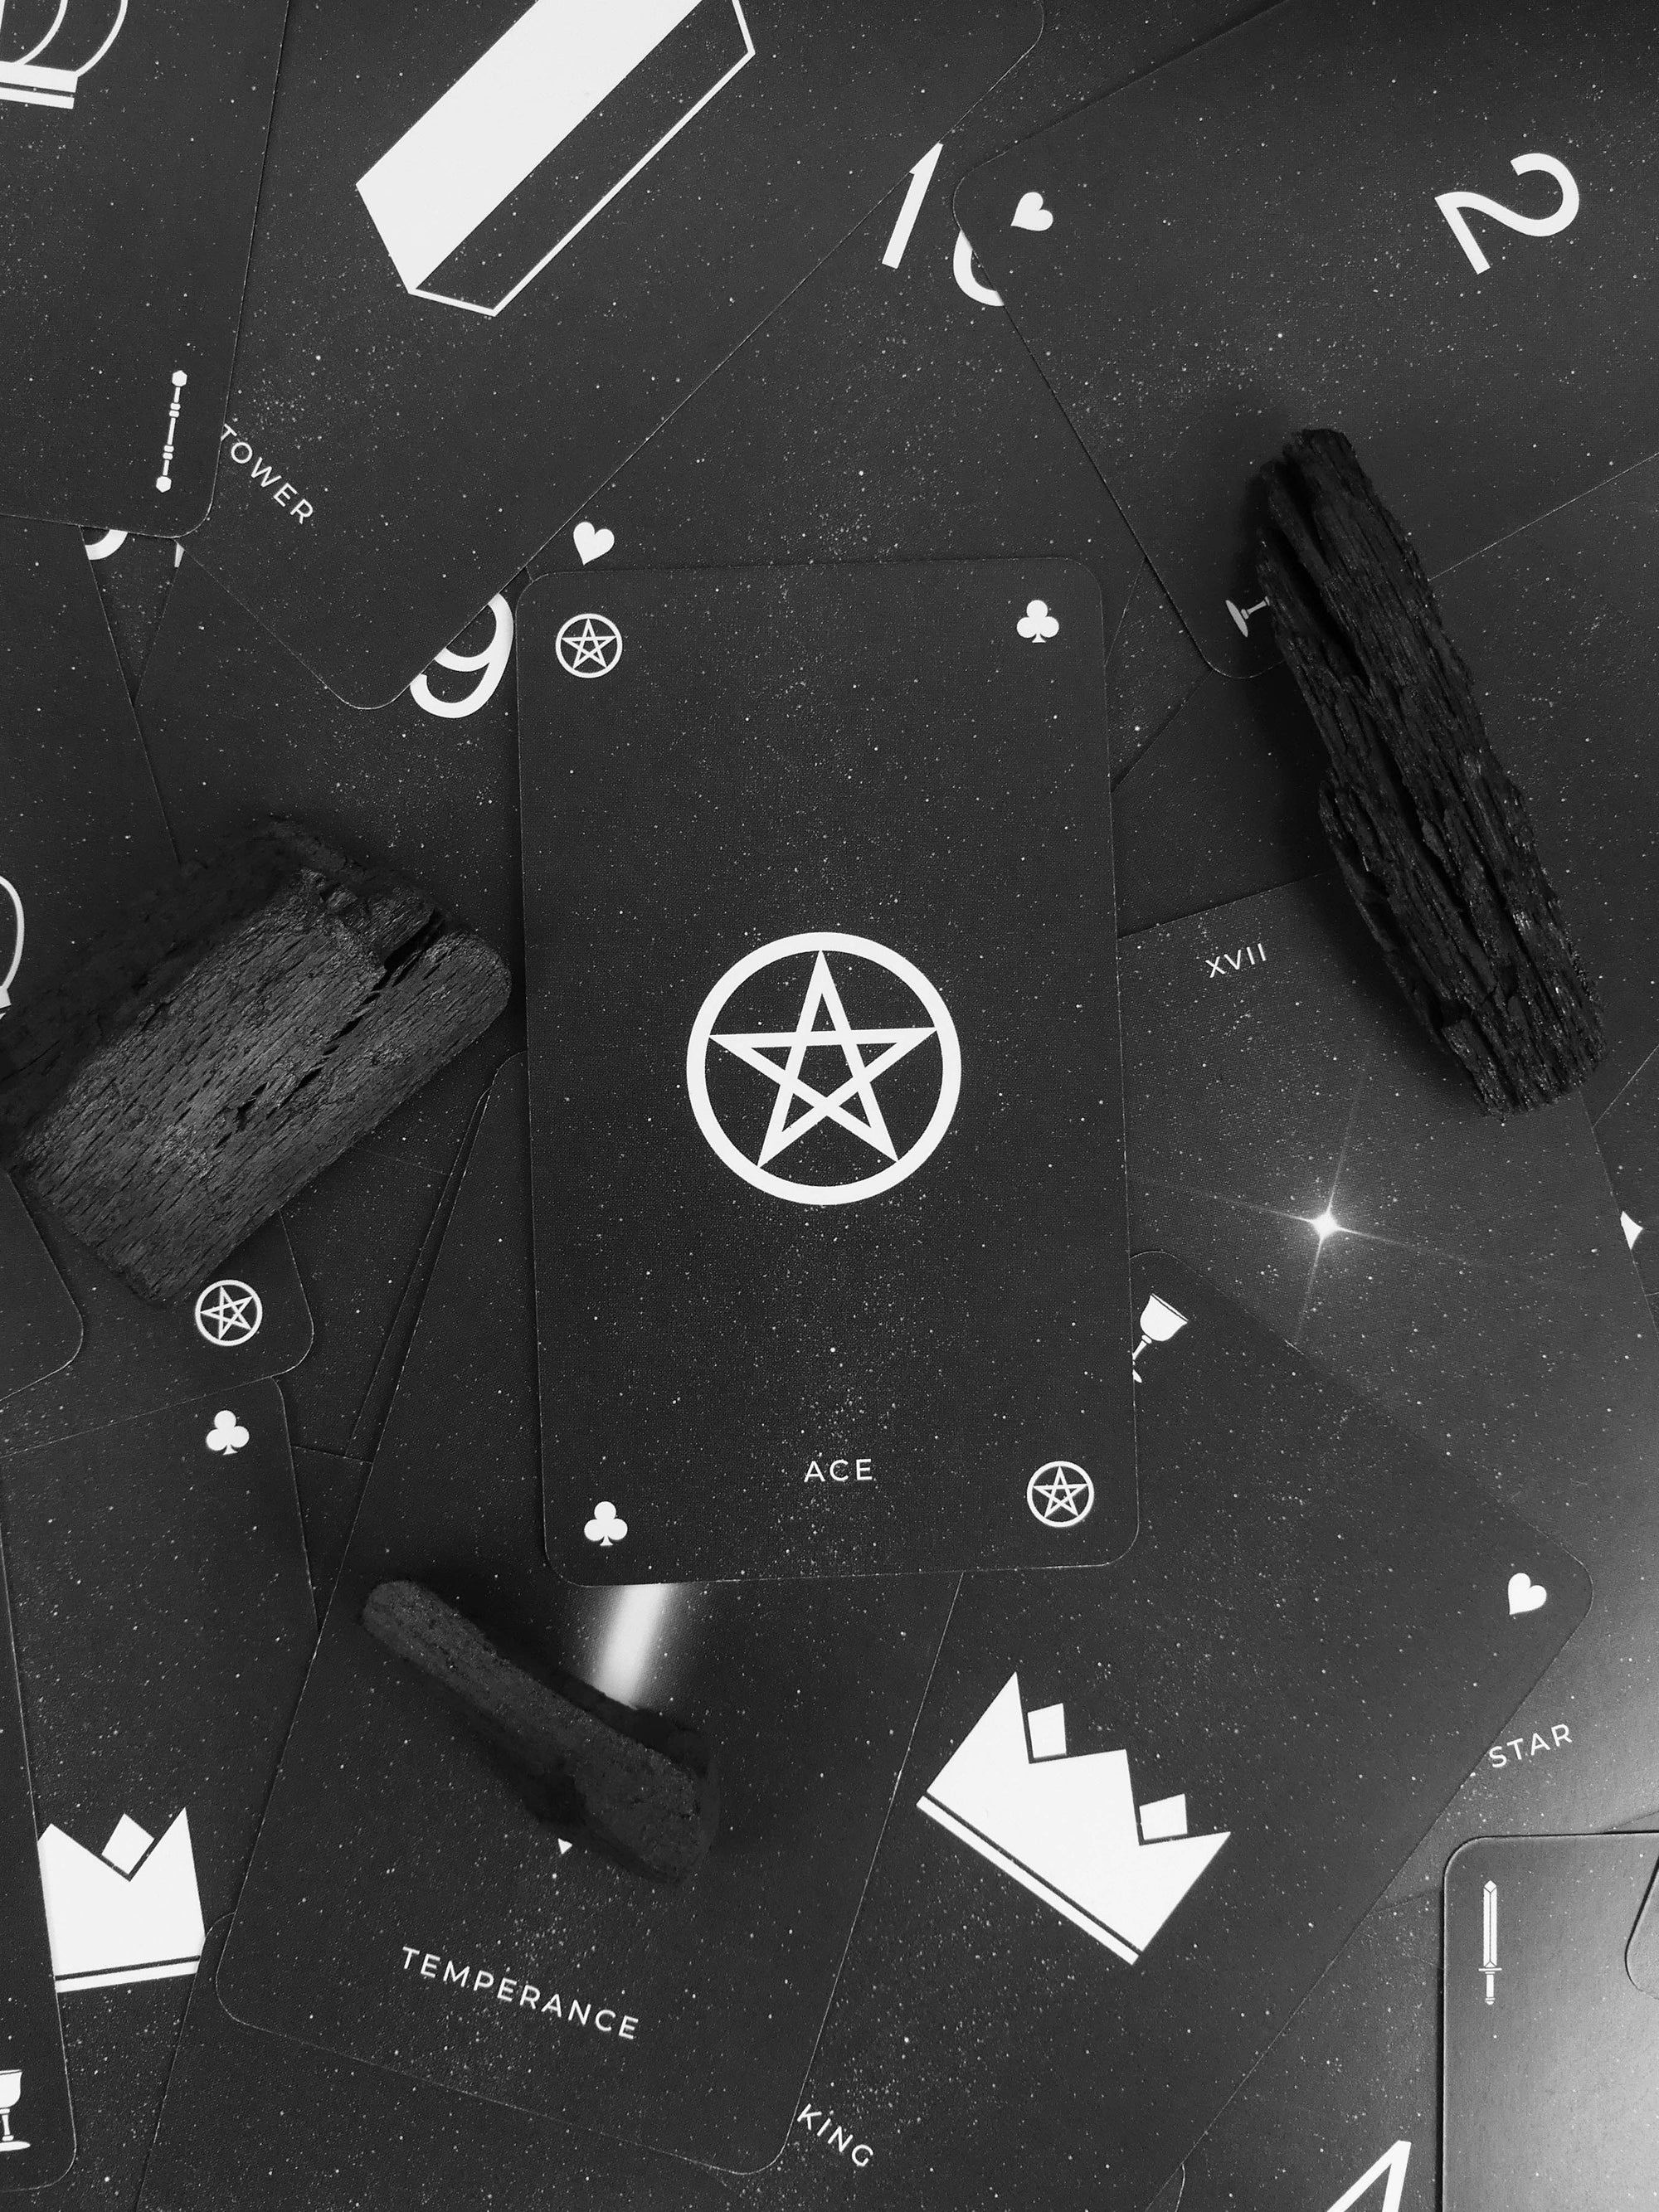 Space Delirium - Stardust Minimalist Tarot - Space Camp